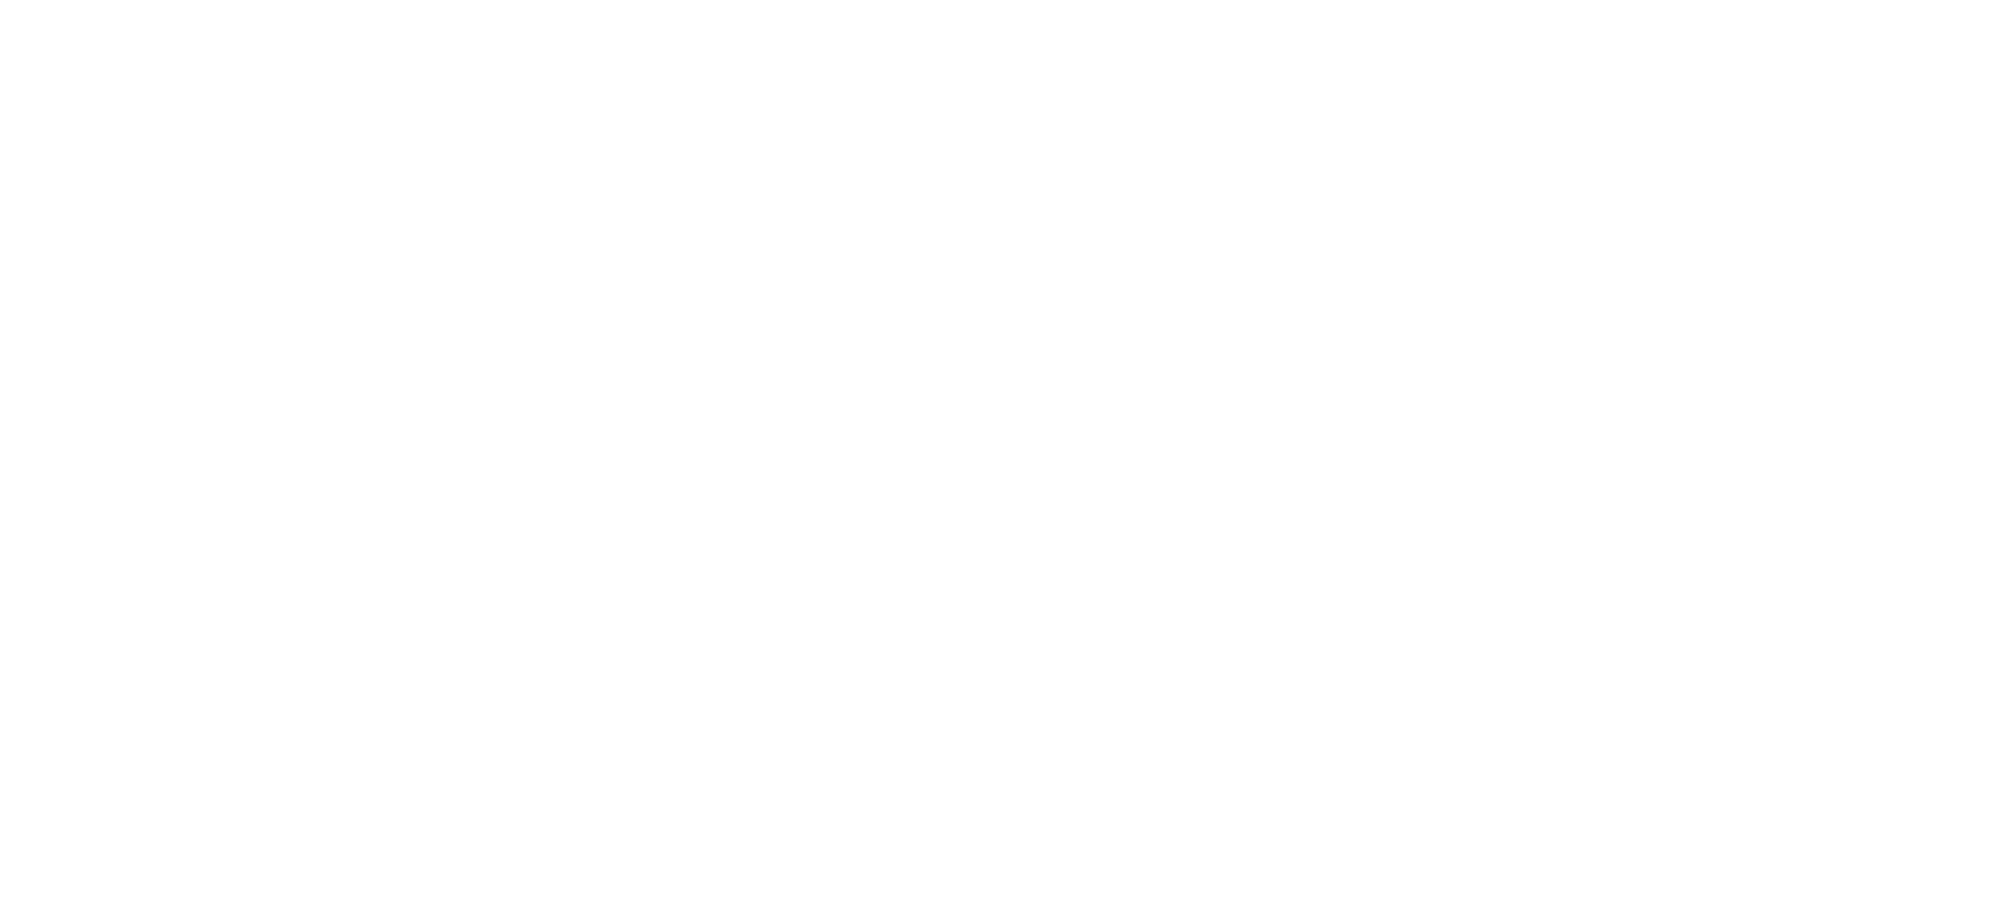 The Adamo Group